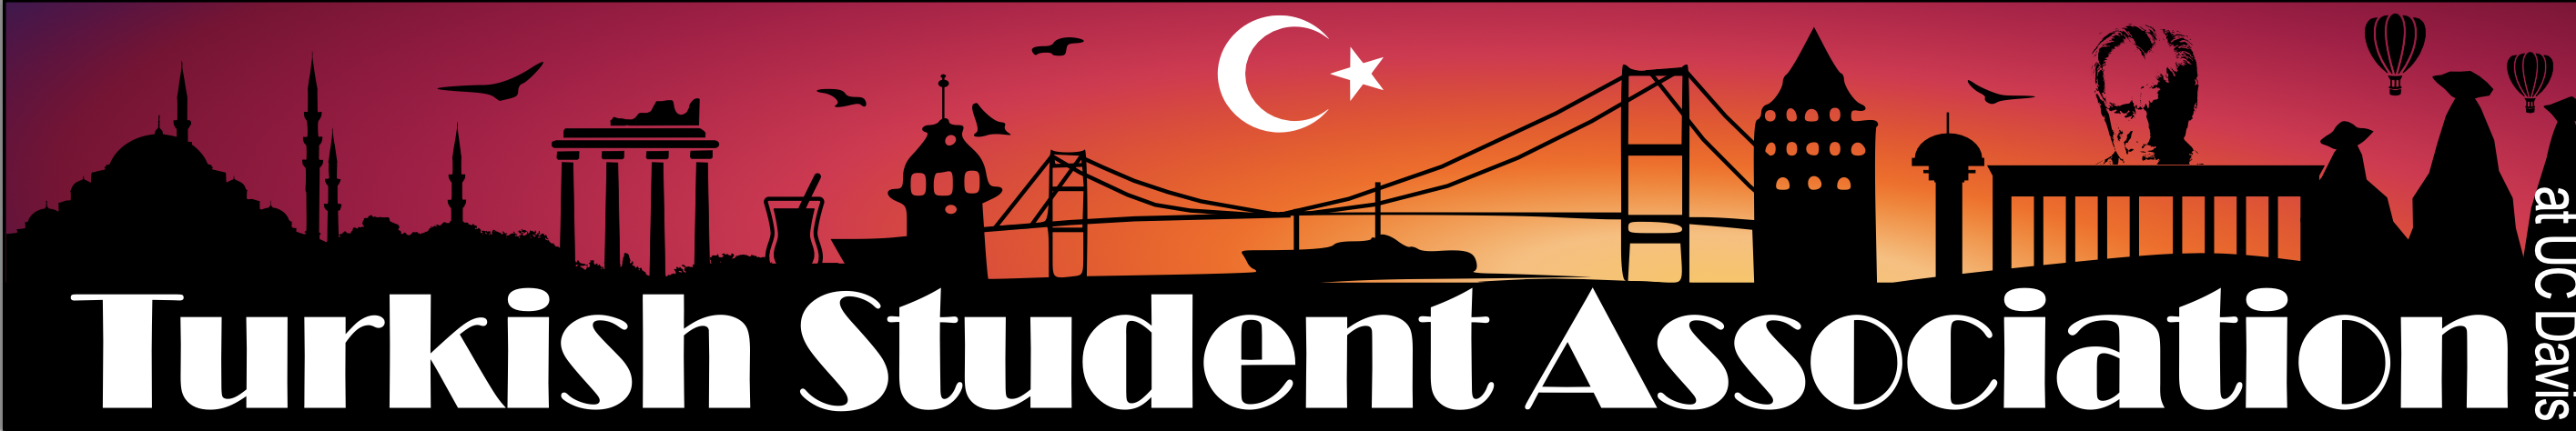 Turkish Student Association at UC Davis feature image